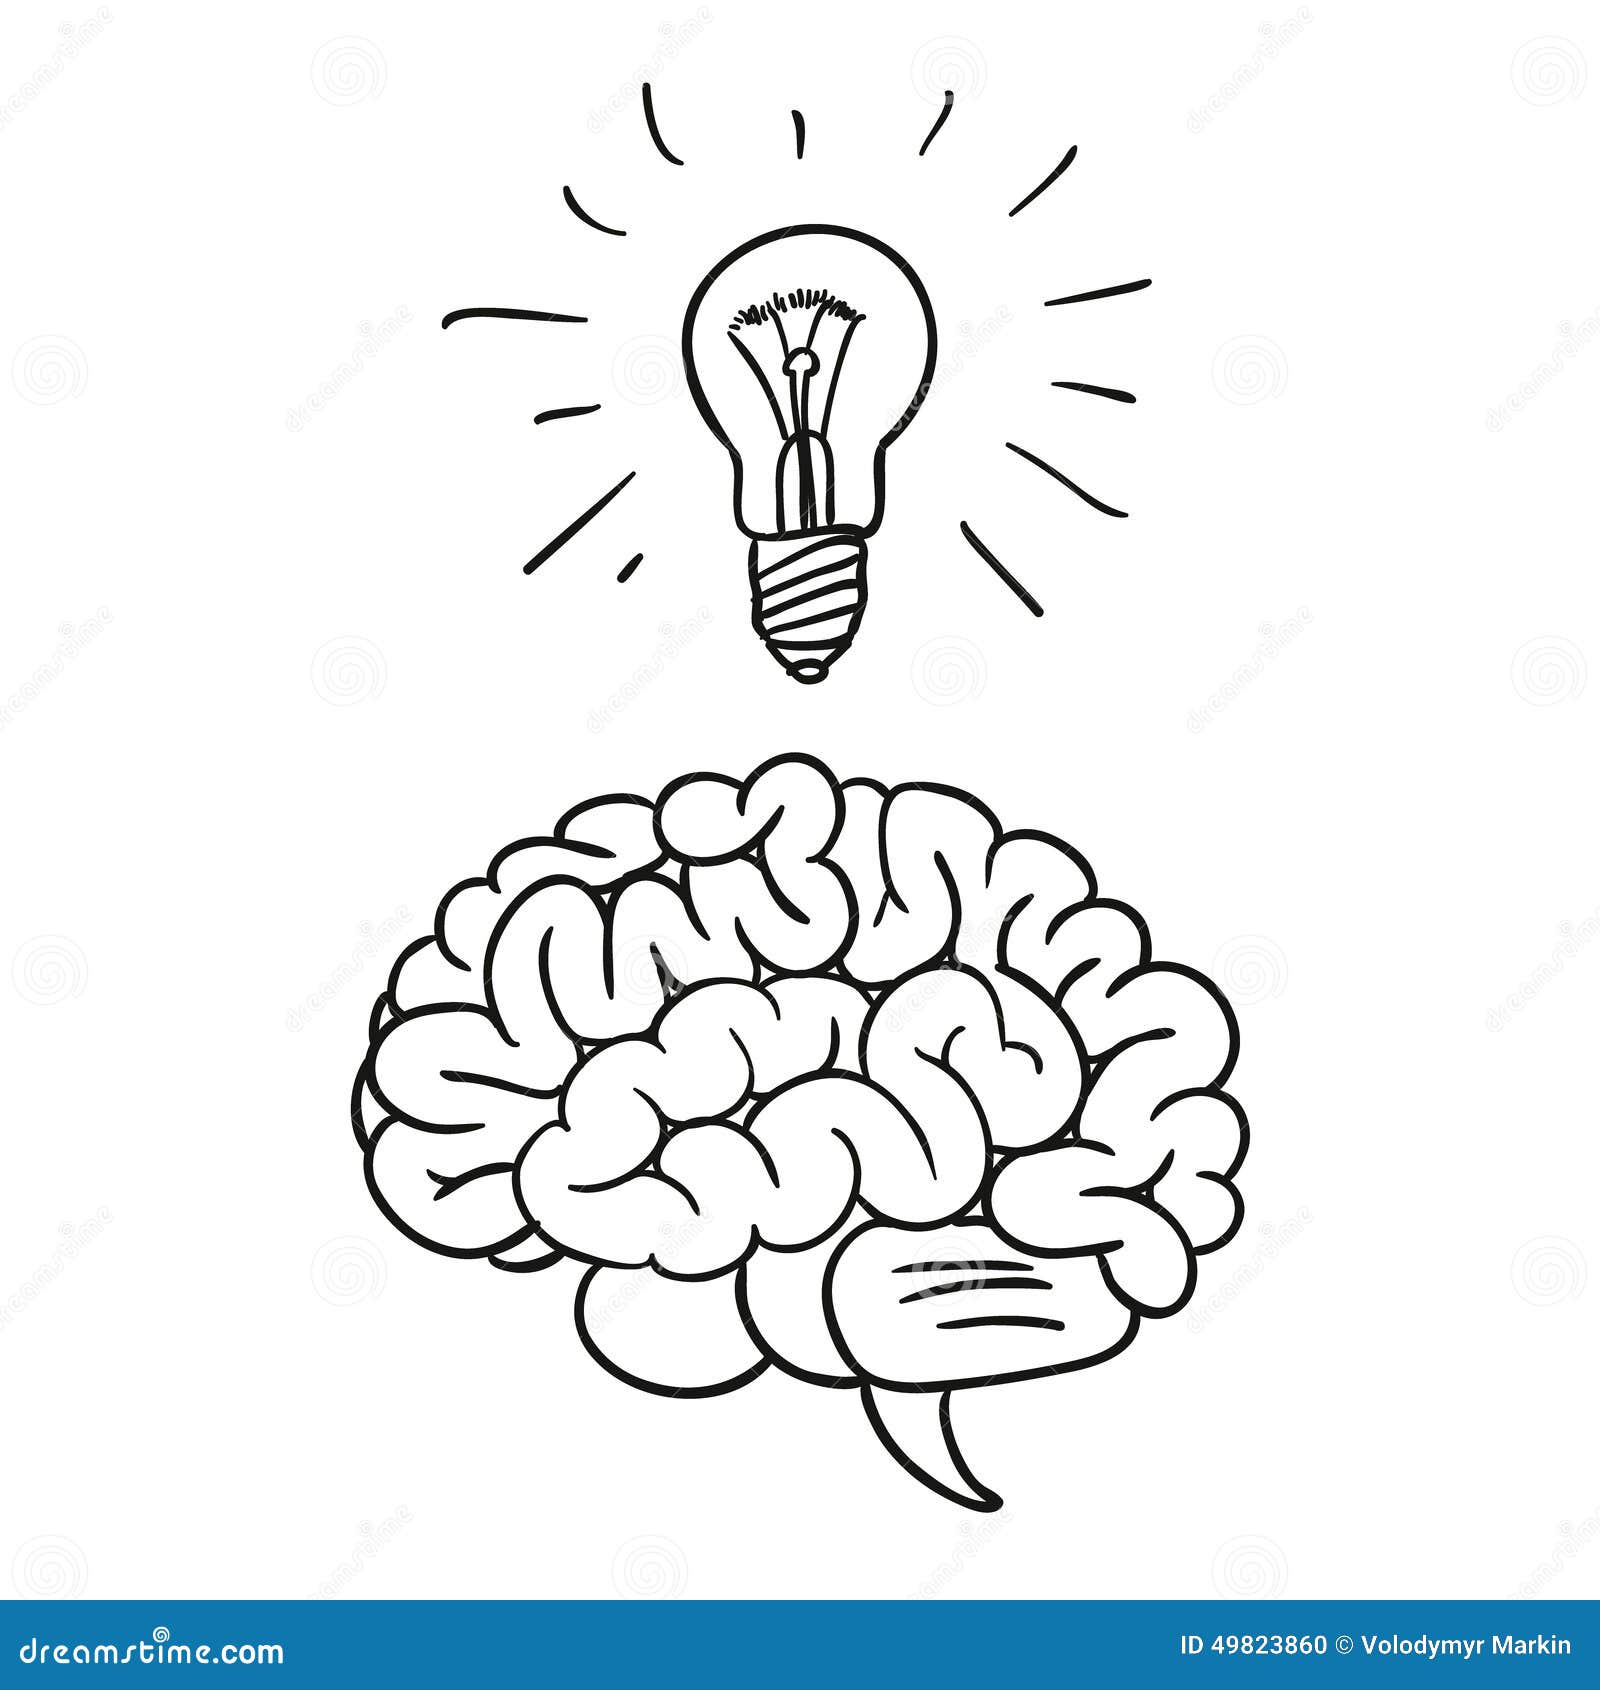 Creative Brain Idea and Light Bulb Stock Illustration - Illustration of ...